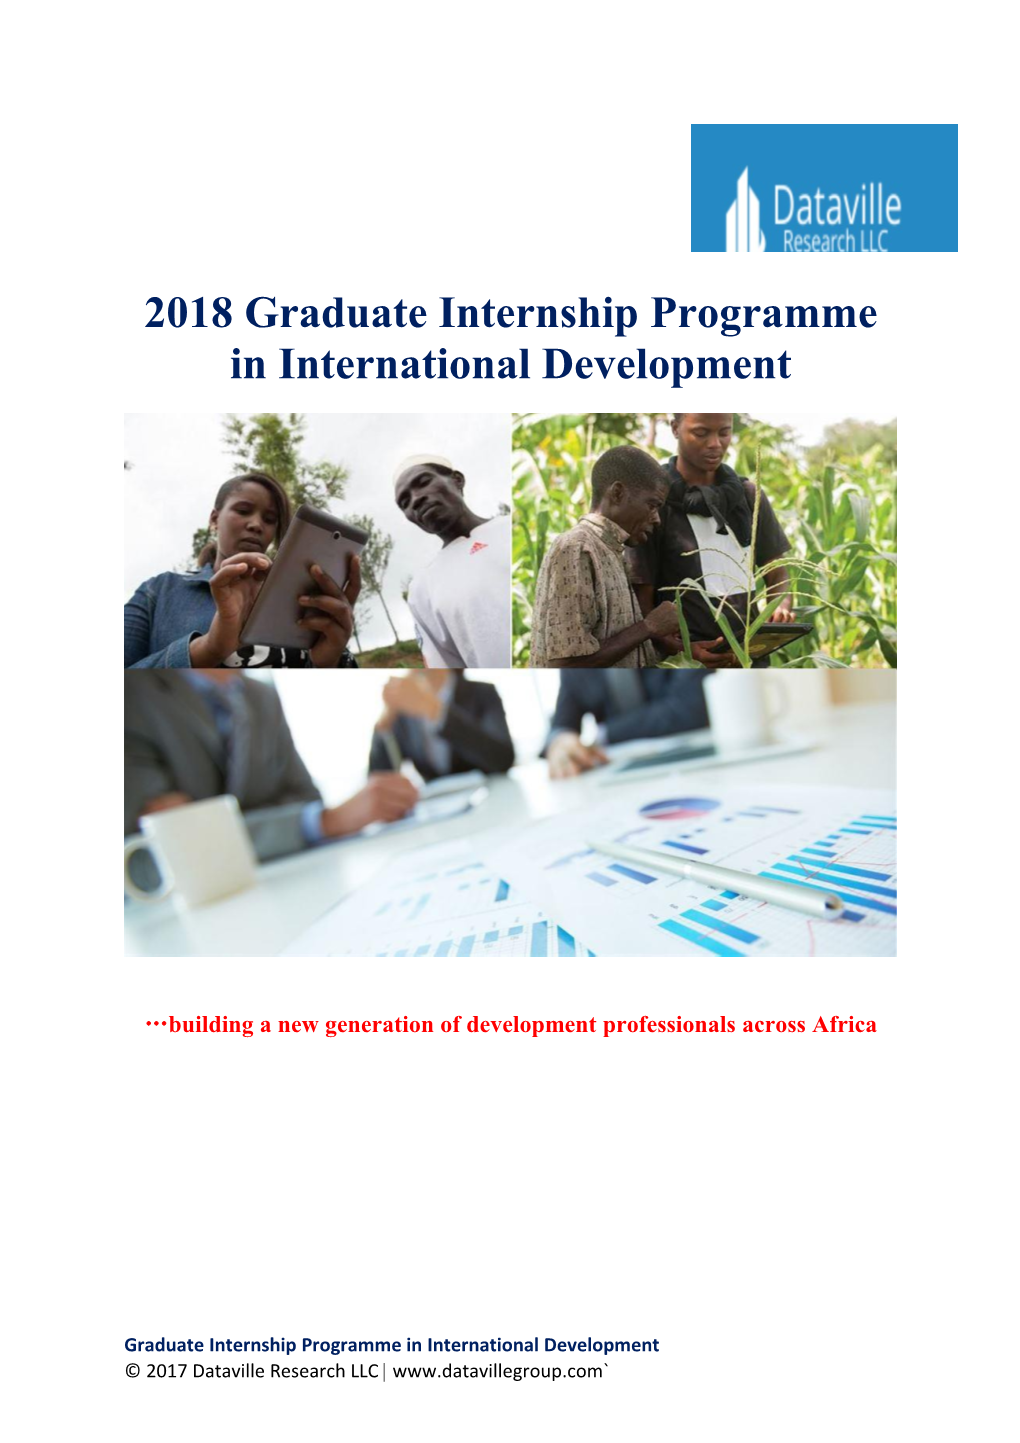 2018 Graduate Internship Programme in International Development